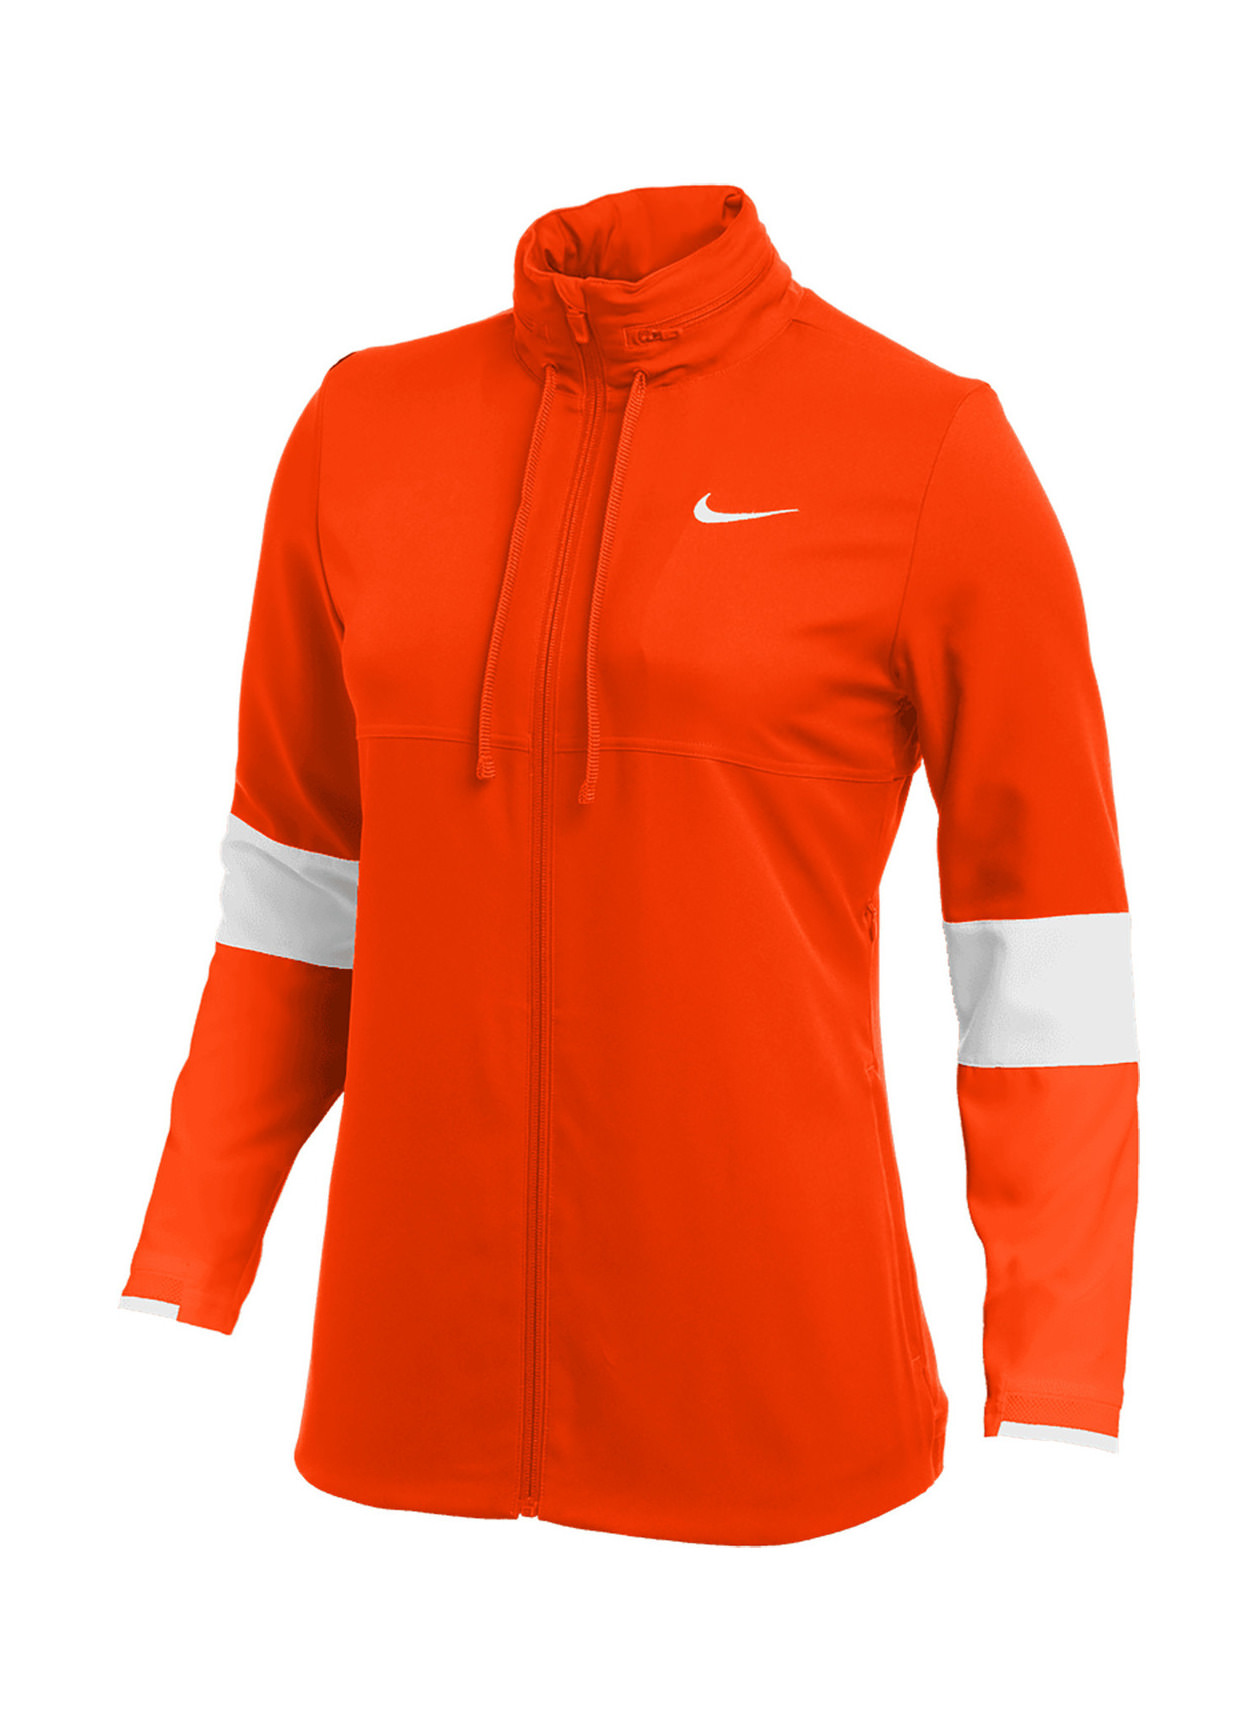 Nike Women's Team Orange / White Dri-FIT Jacket